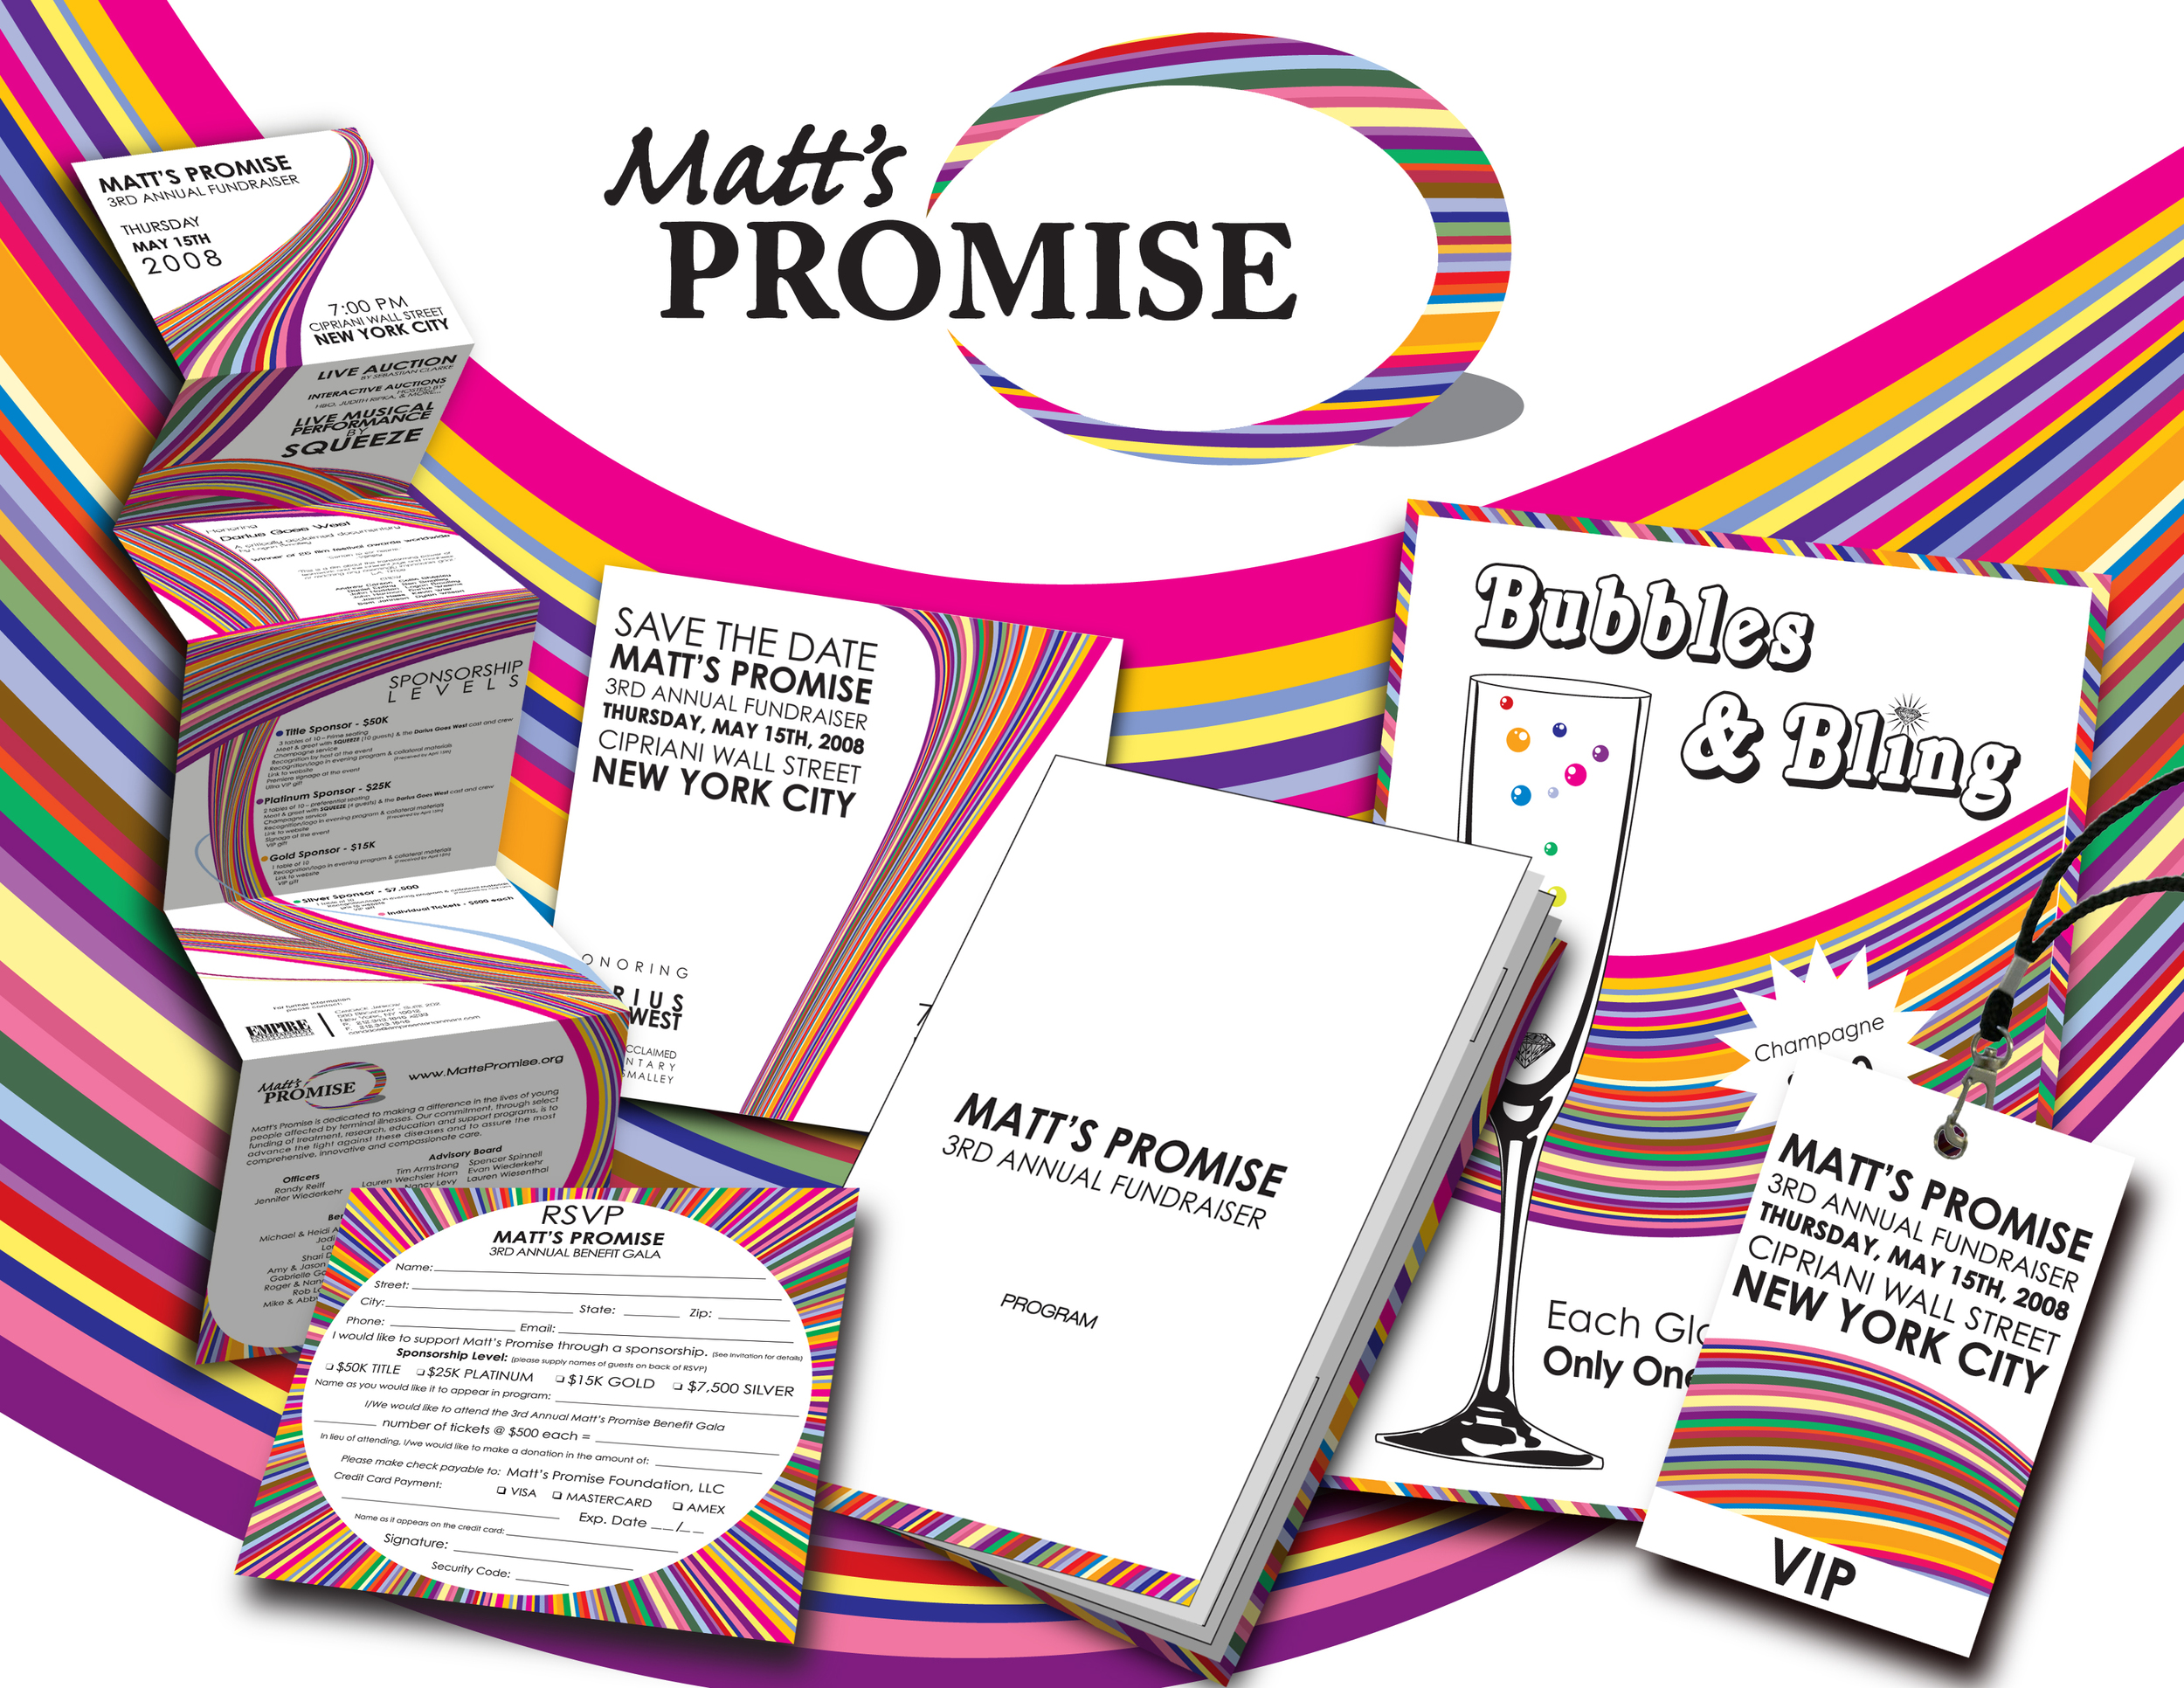 Matts Promise Spread.jpg